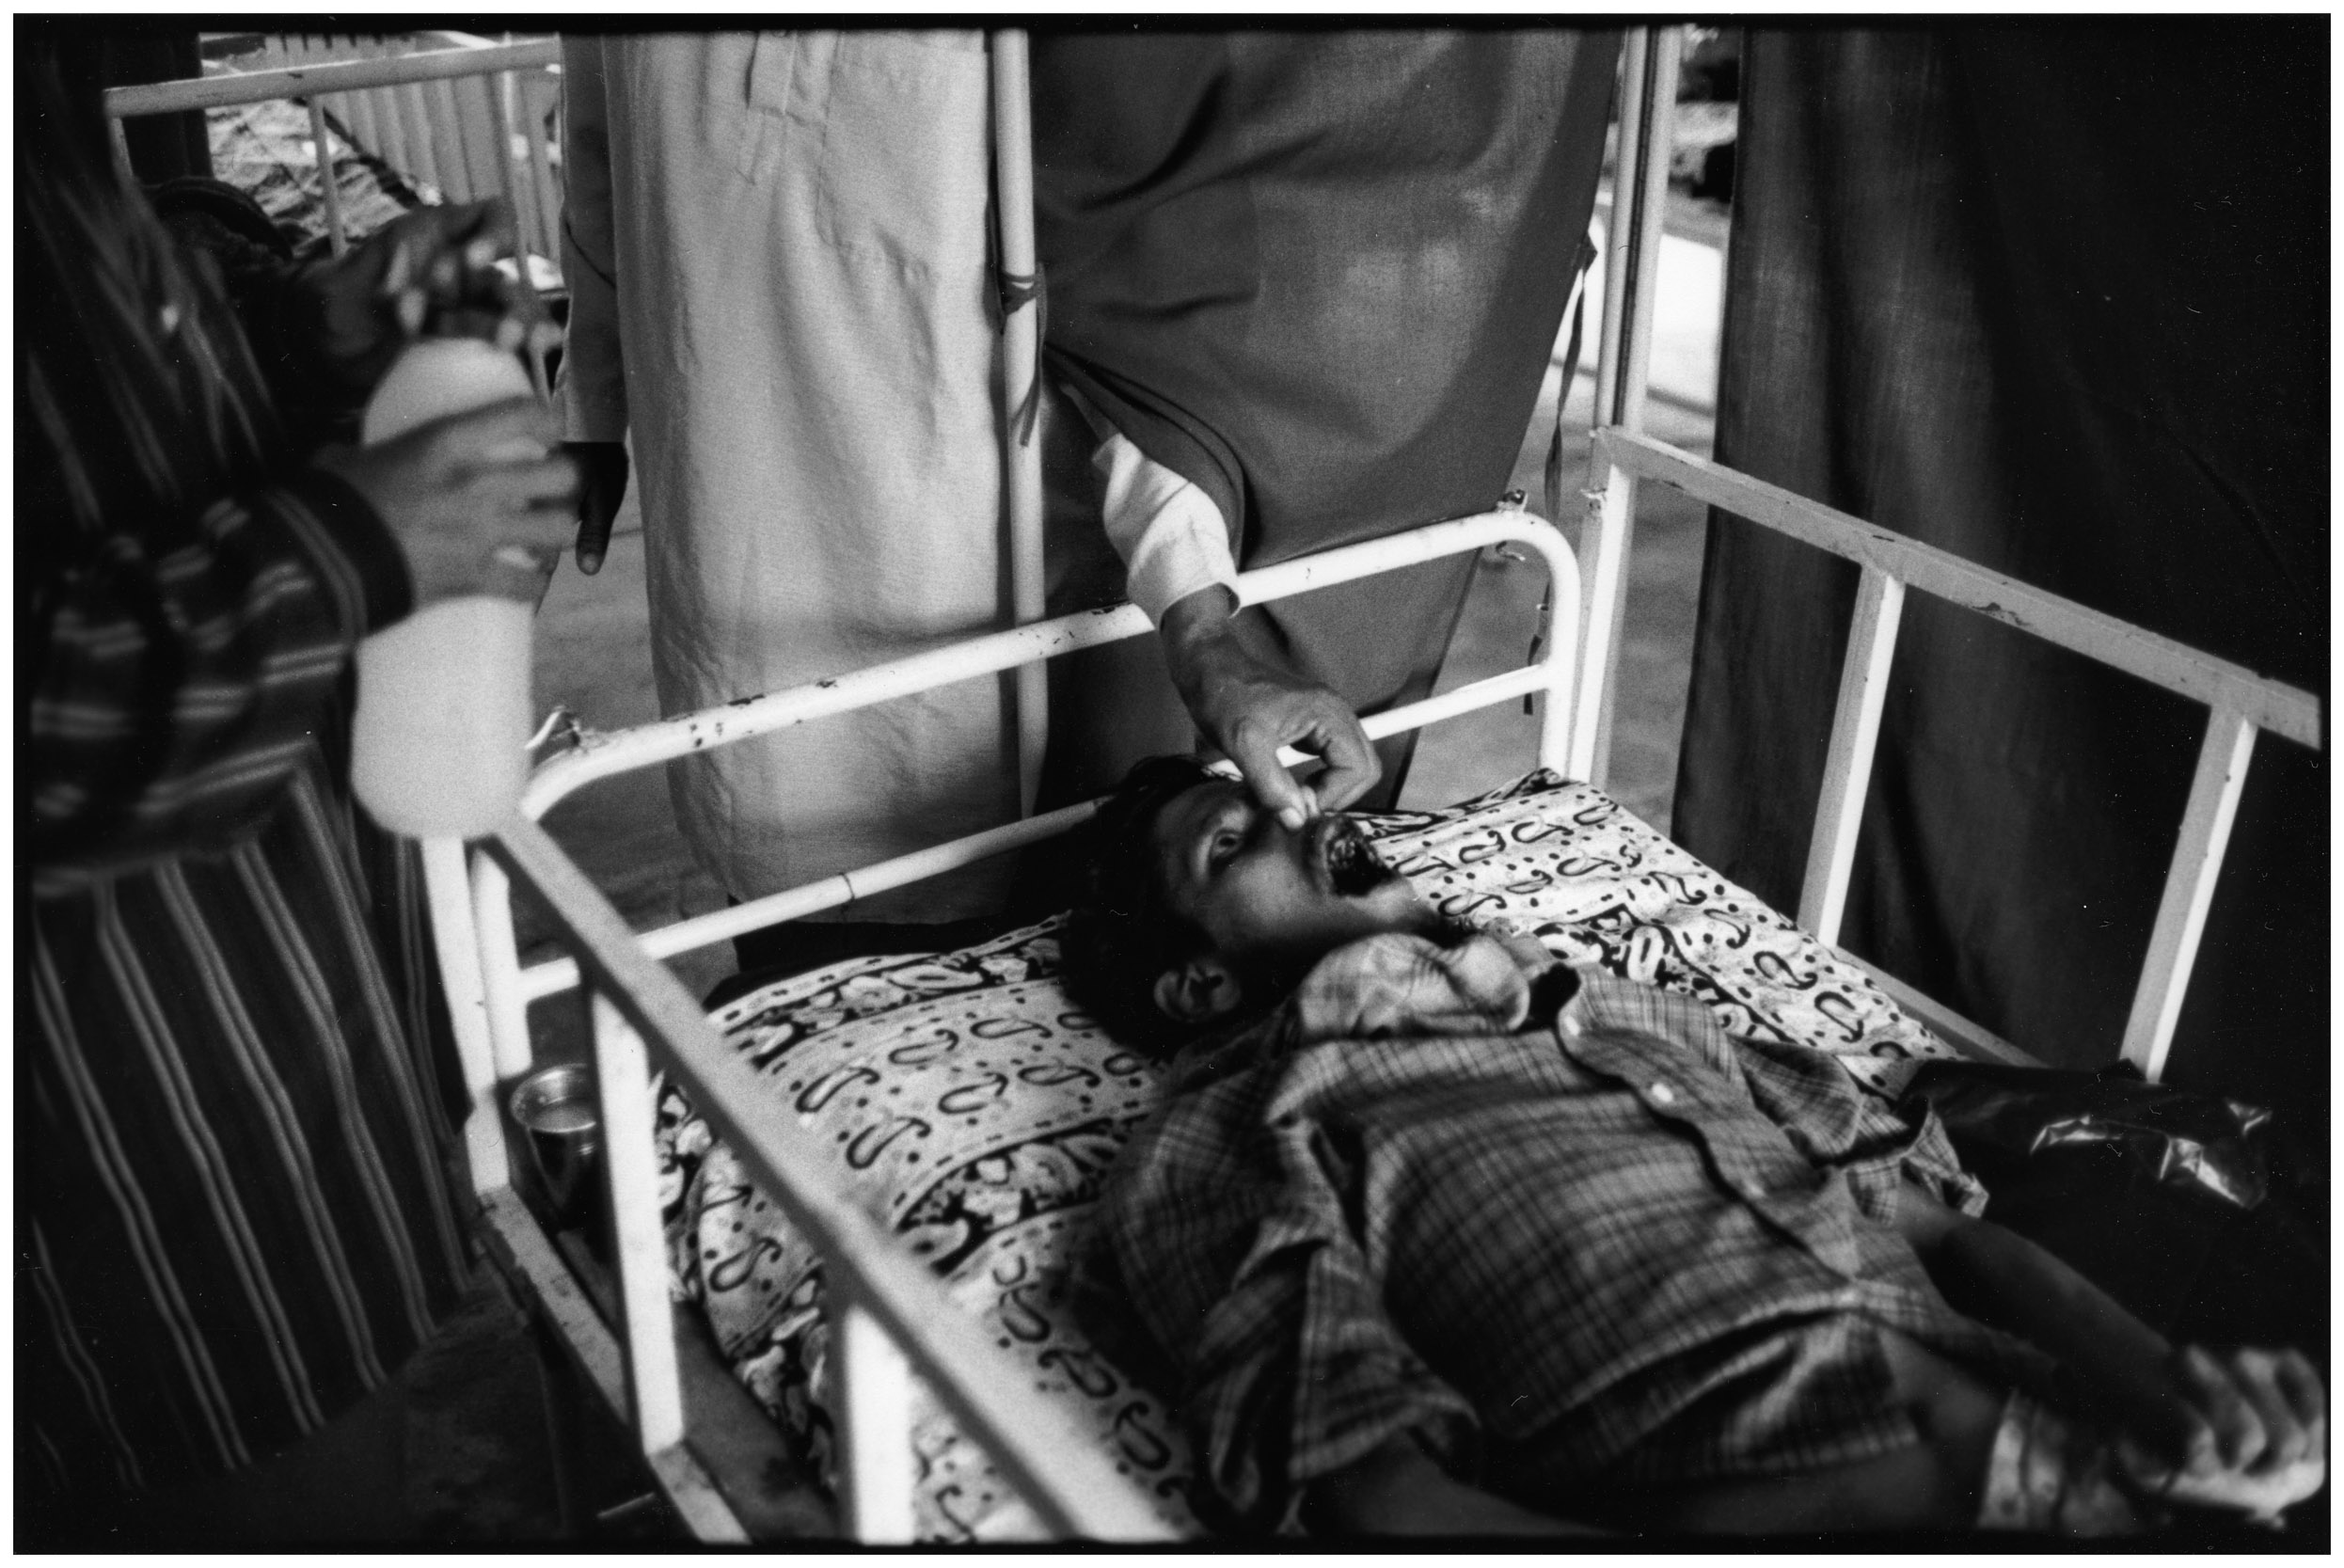 01_freelance photographer_Srinivas Kuruganti_New Delhi_HIV AIDS India.jpg